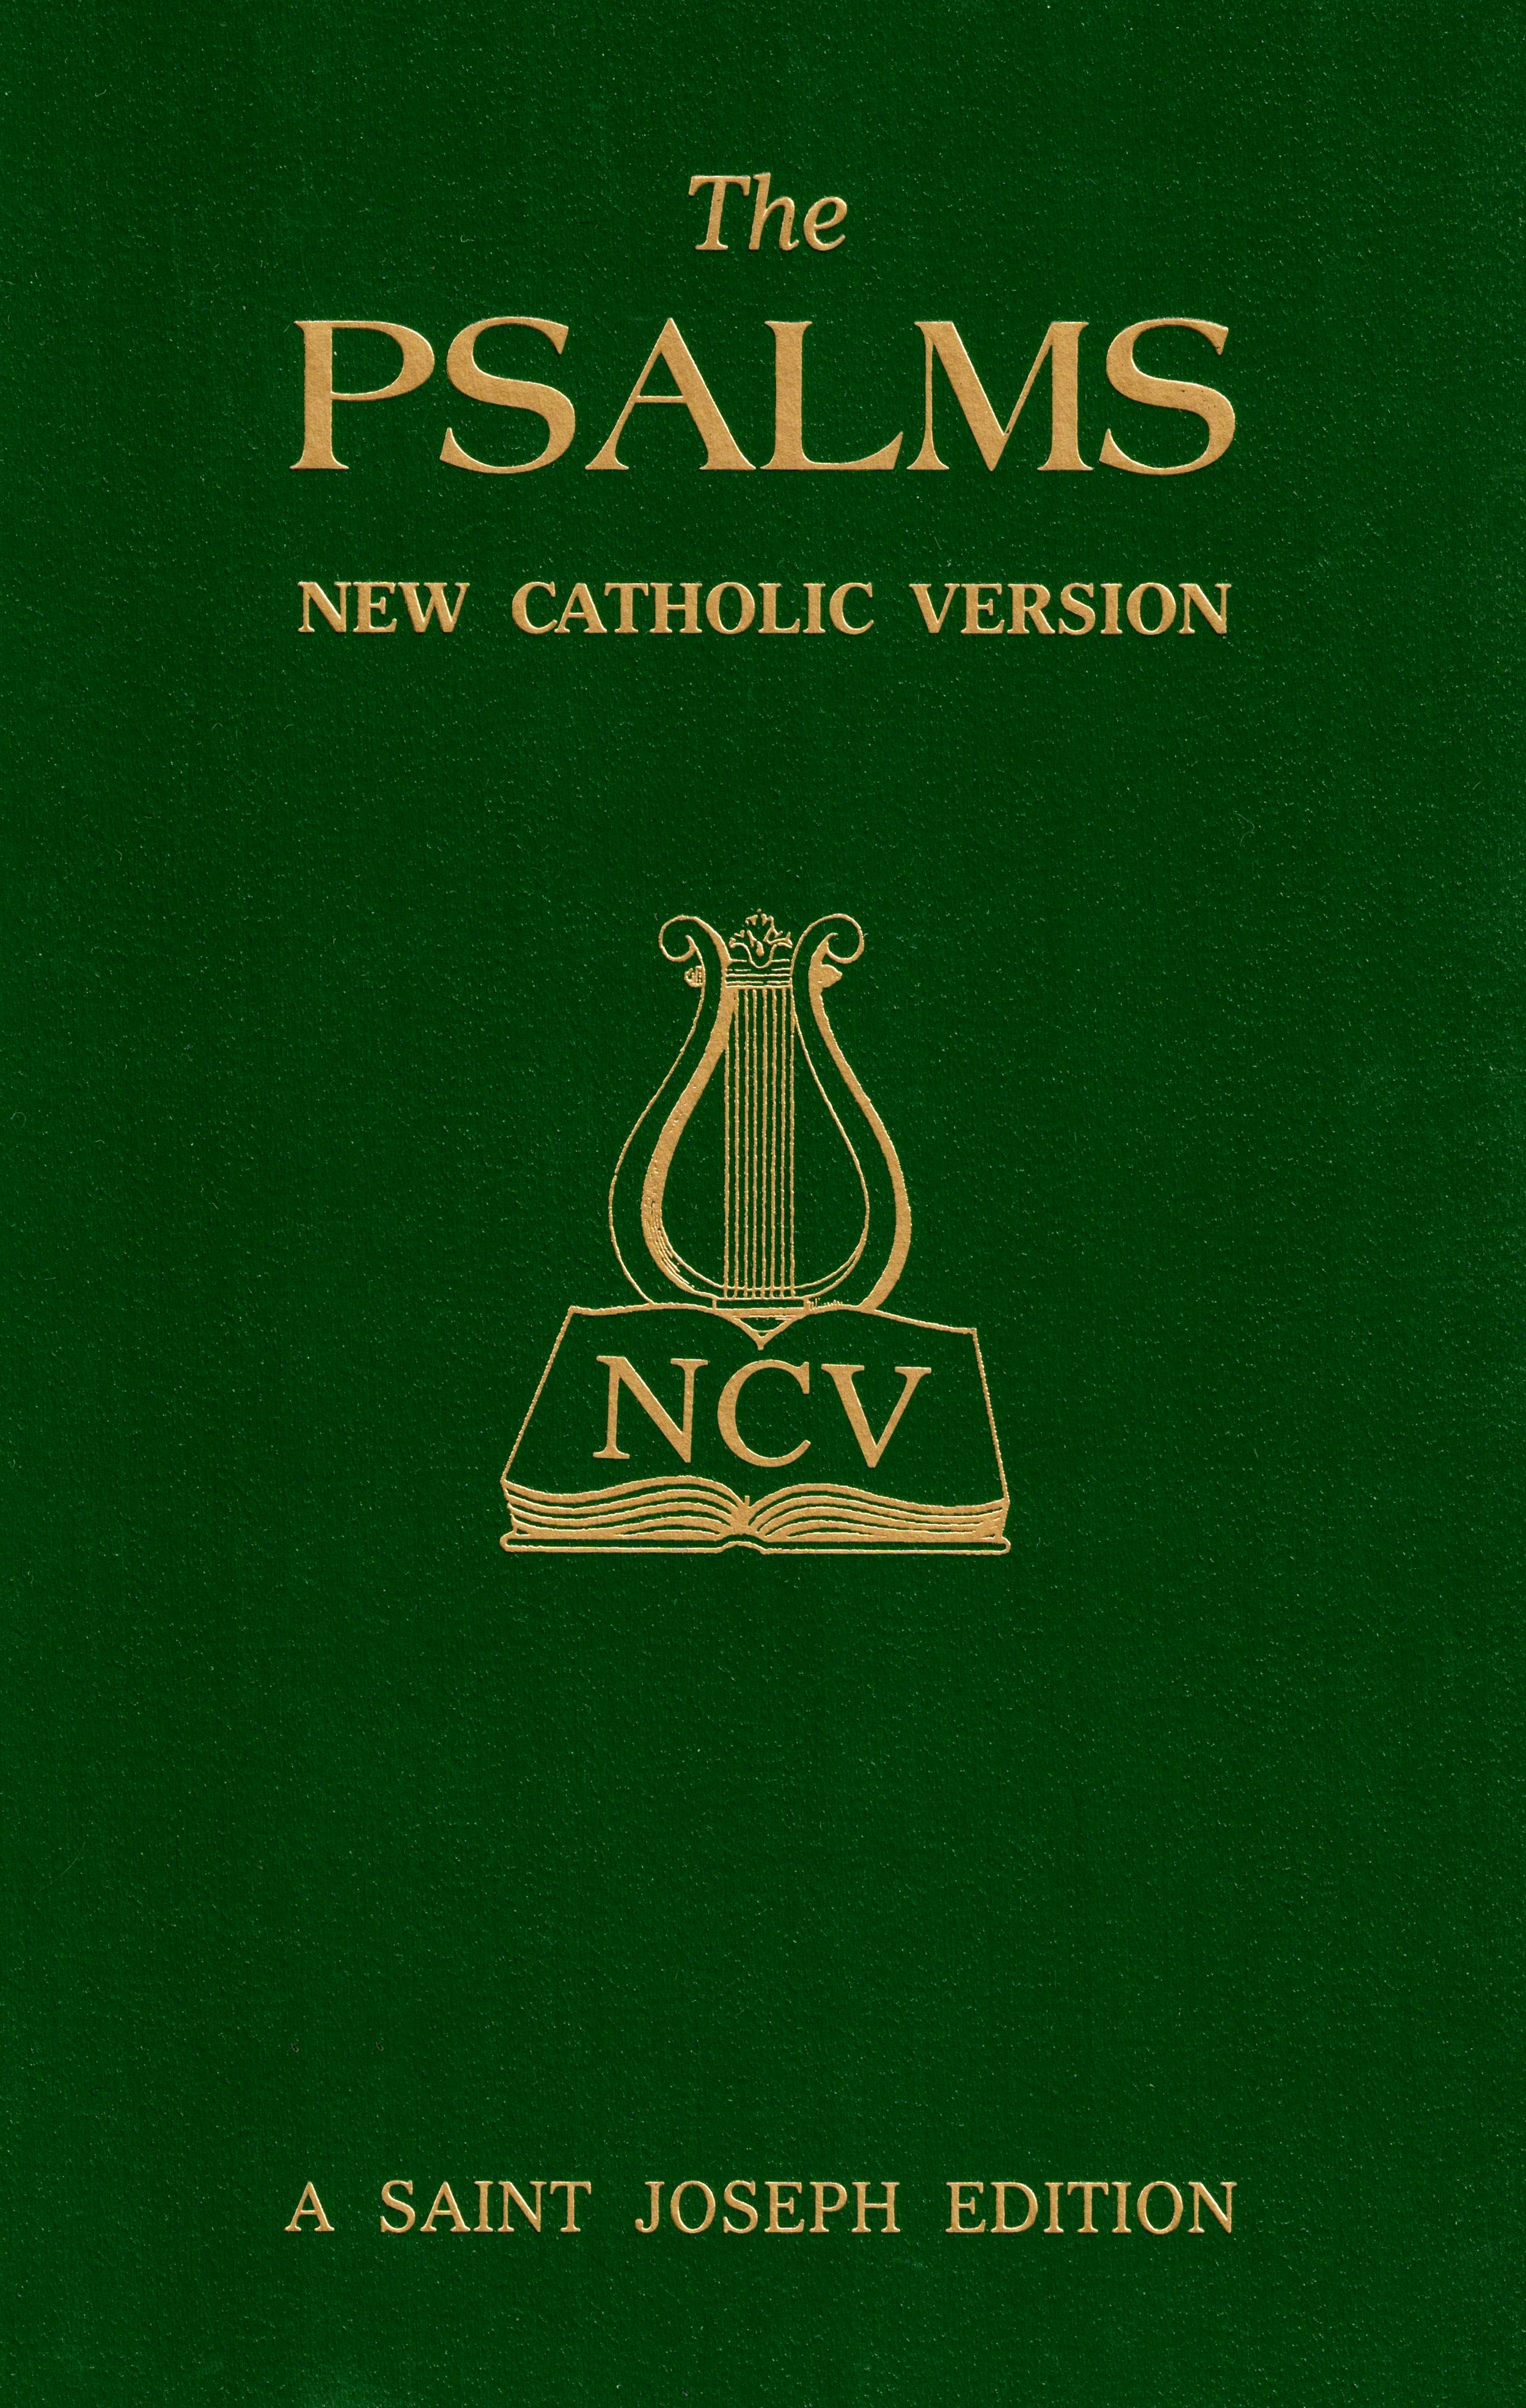 The Psalms, New Catholic Version